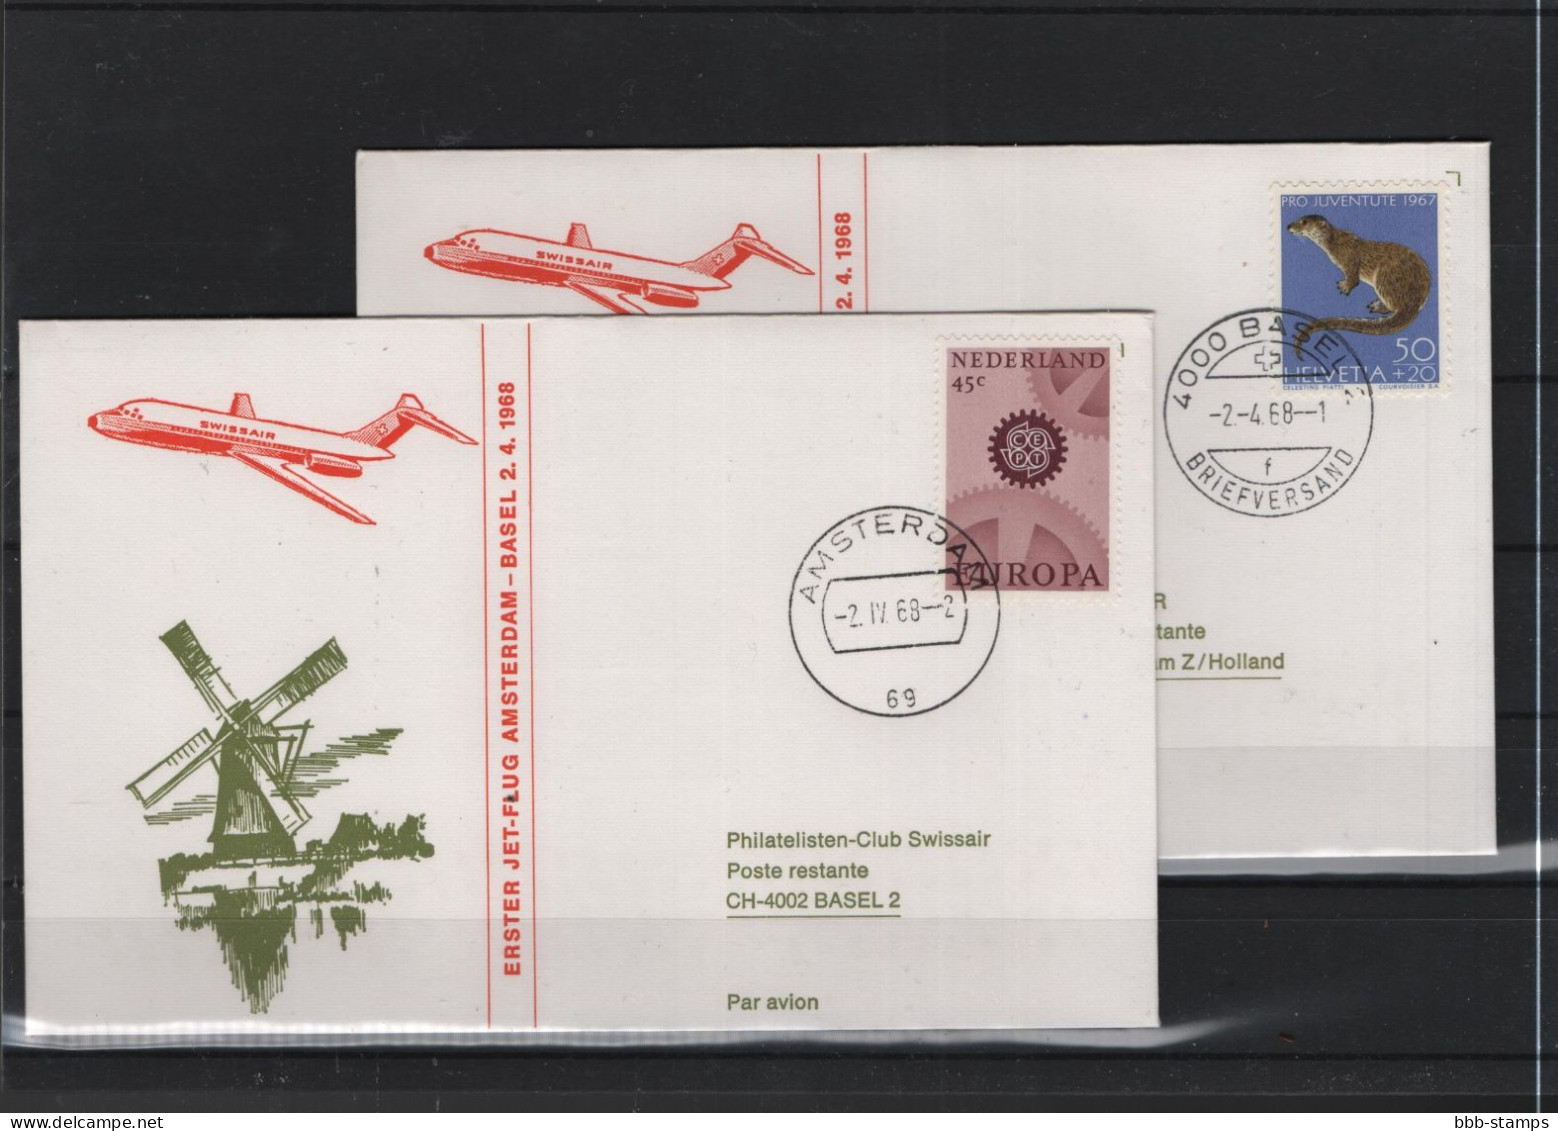 Schweiz Air Mail Swissair  FFC  2.4.1968 Basel - Amsterdam VV - Premiers Vols